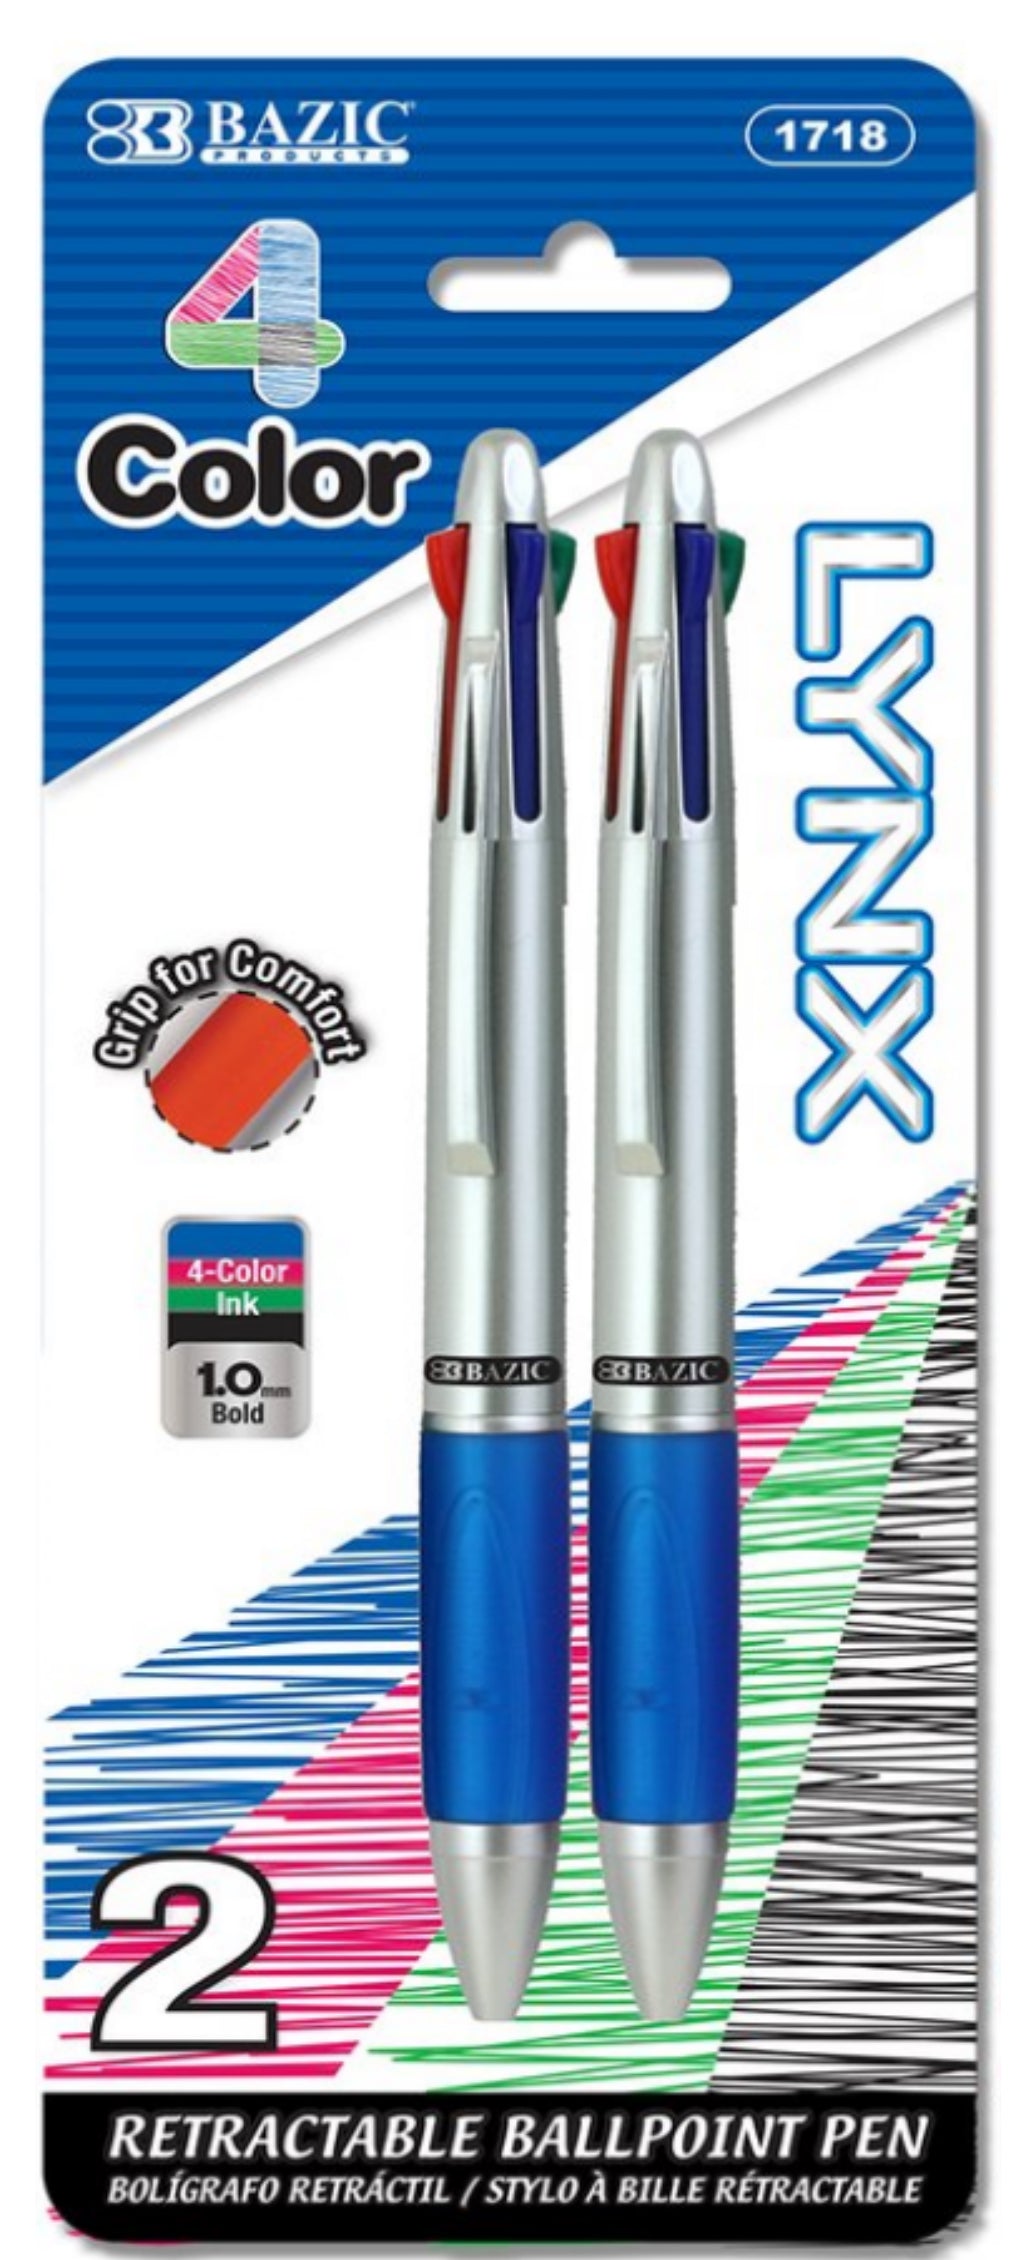 Bazic Silver Top 4-Color Pen with Cushion Grip, 2 Pcs Retractable